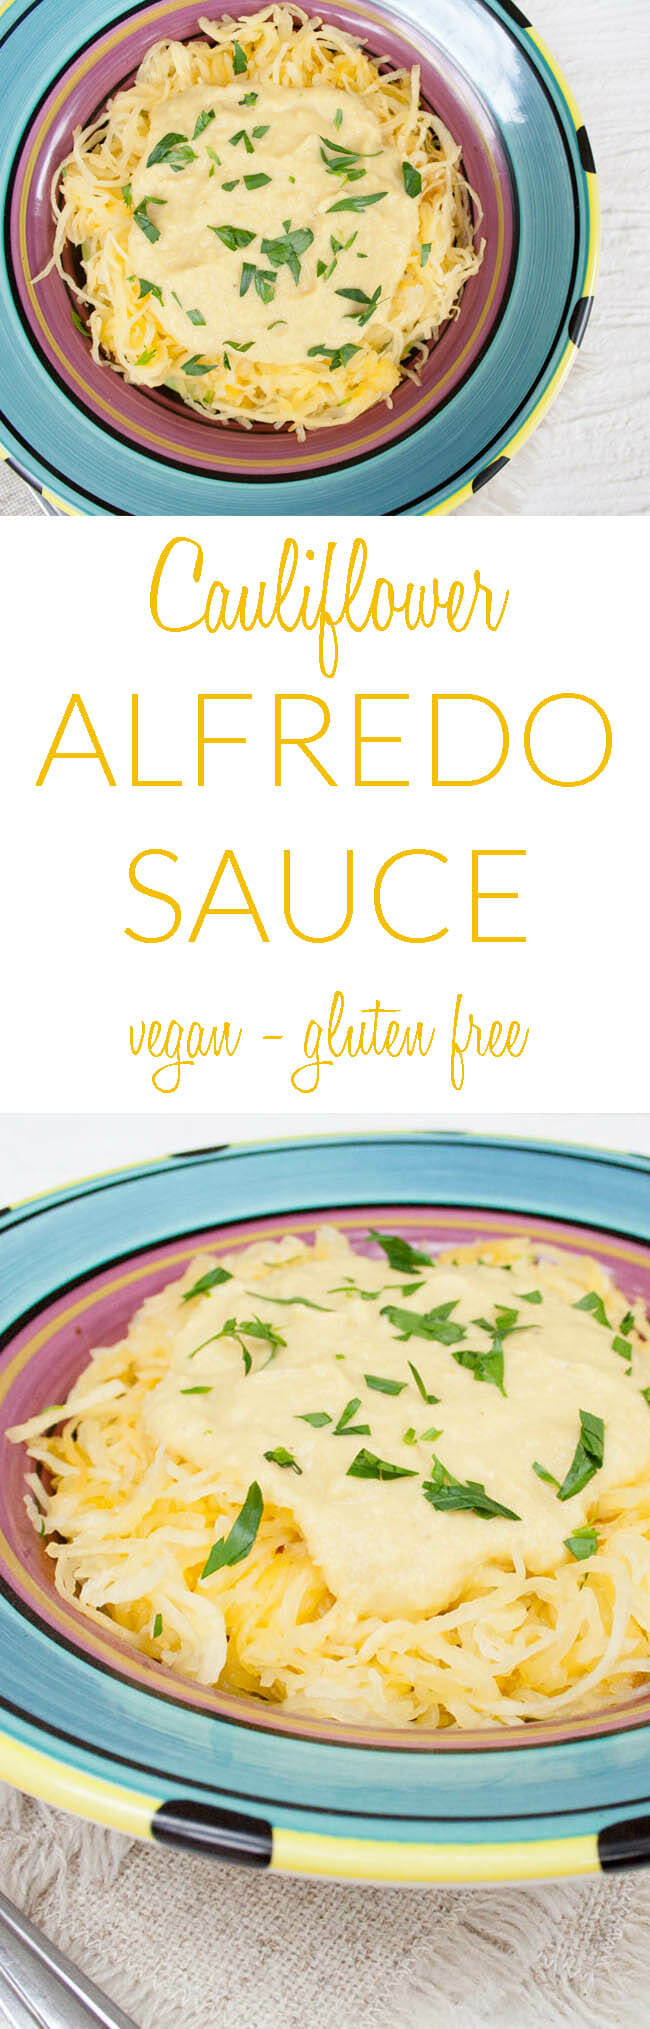 Cauliflower Alfredo Sauce collage photo with text.